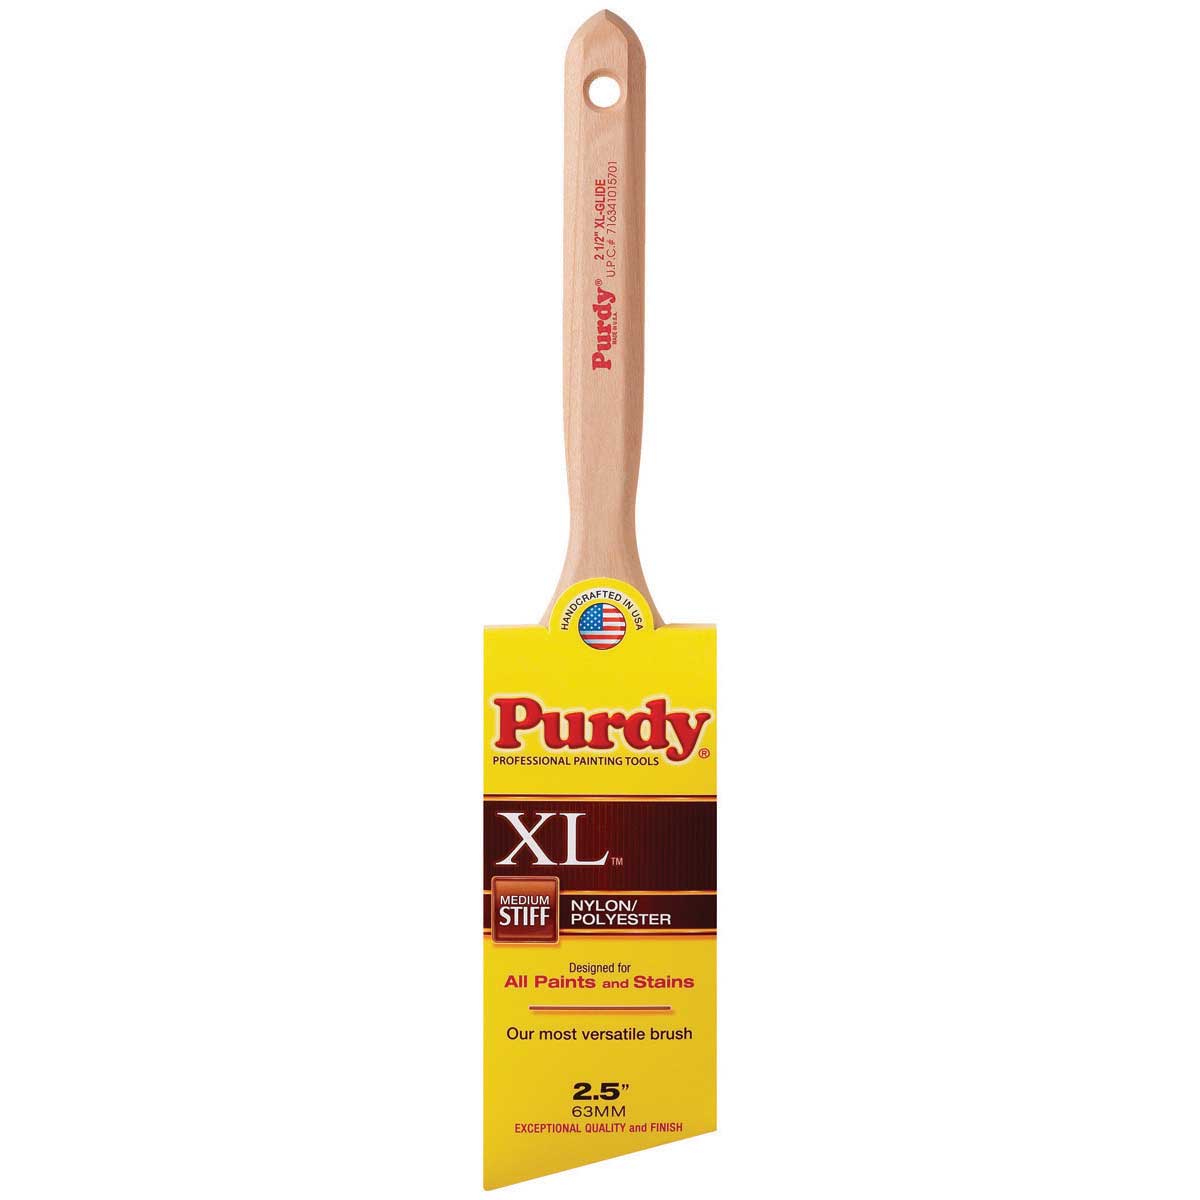 Purdy XL Glide Angle Paint Brush